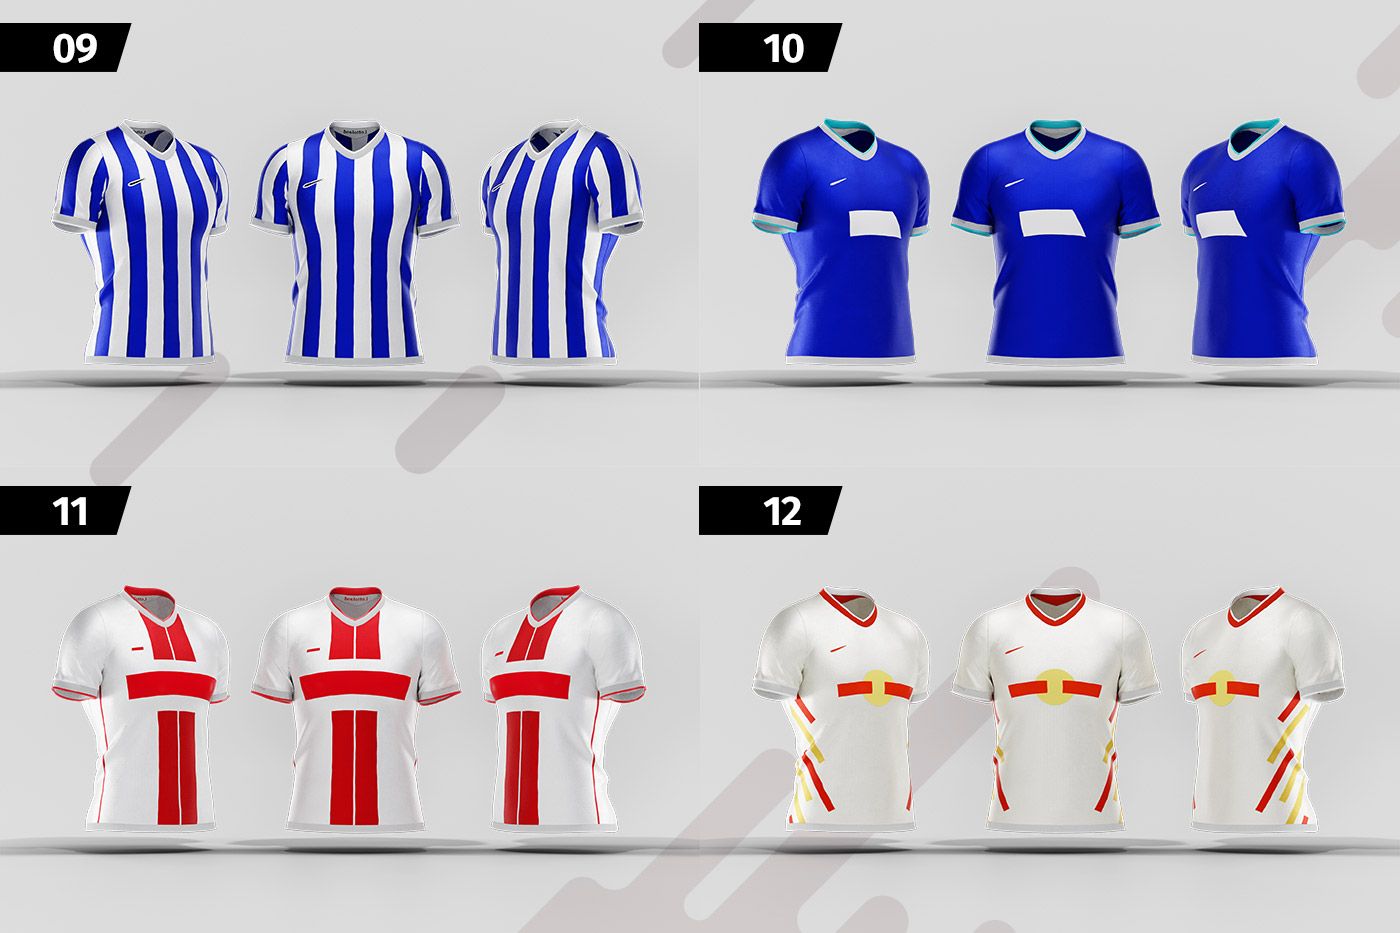 3D Football jersey reinvented